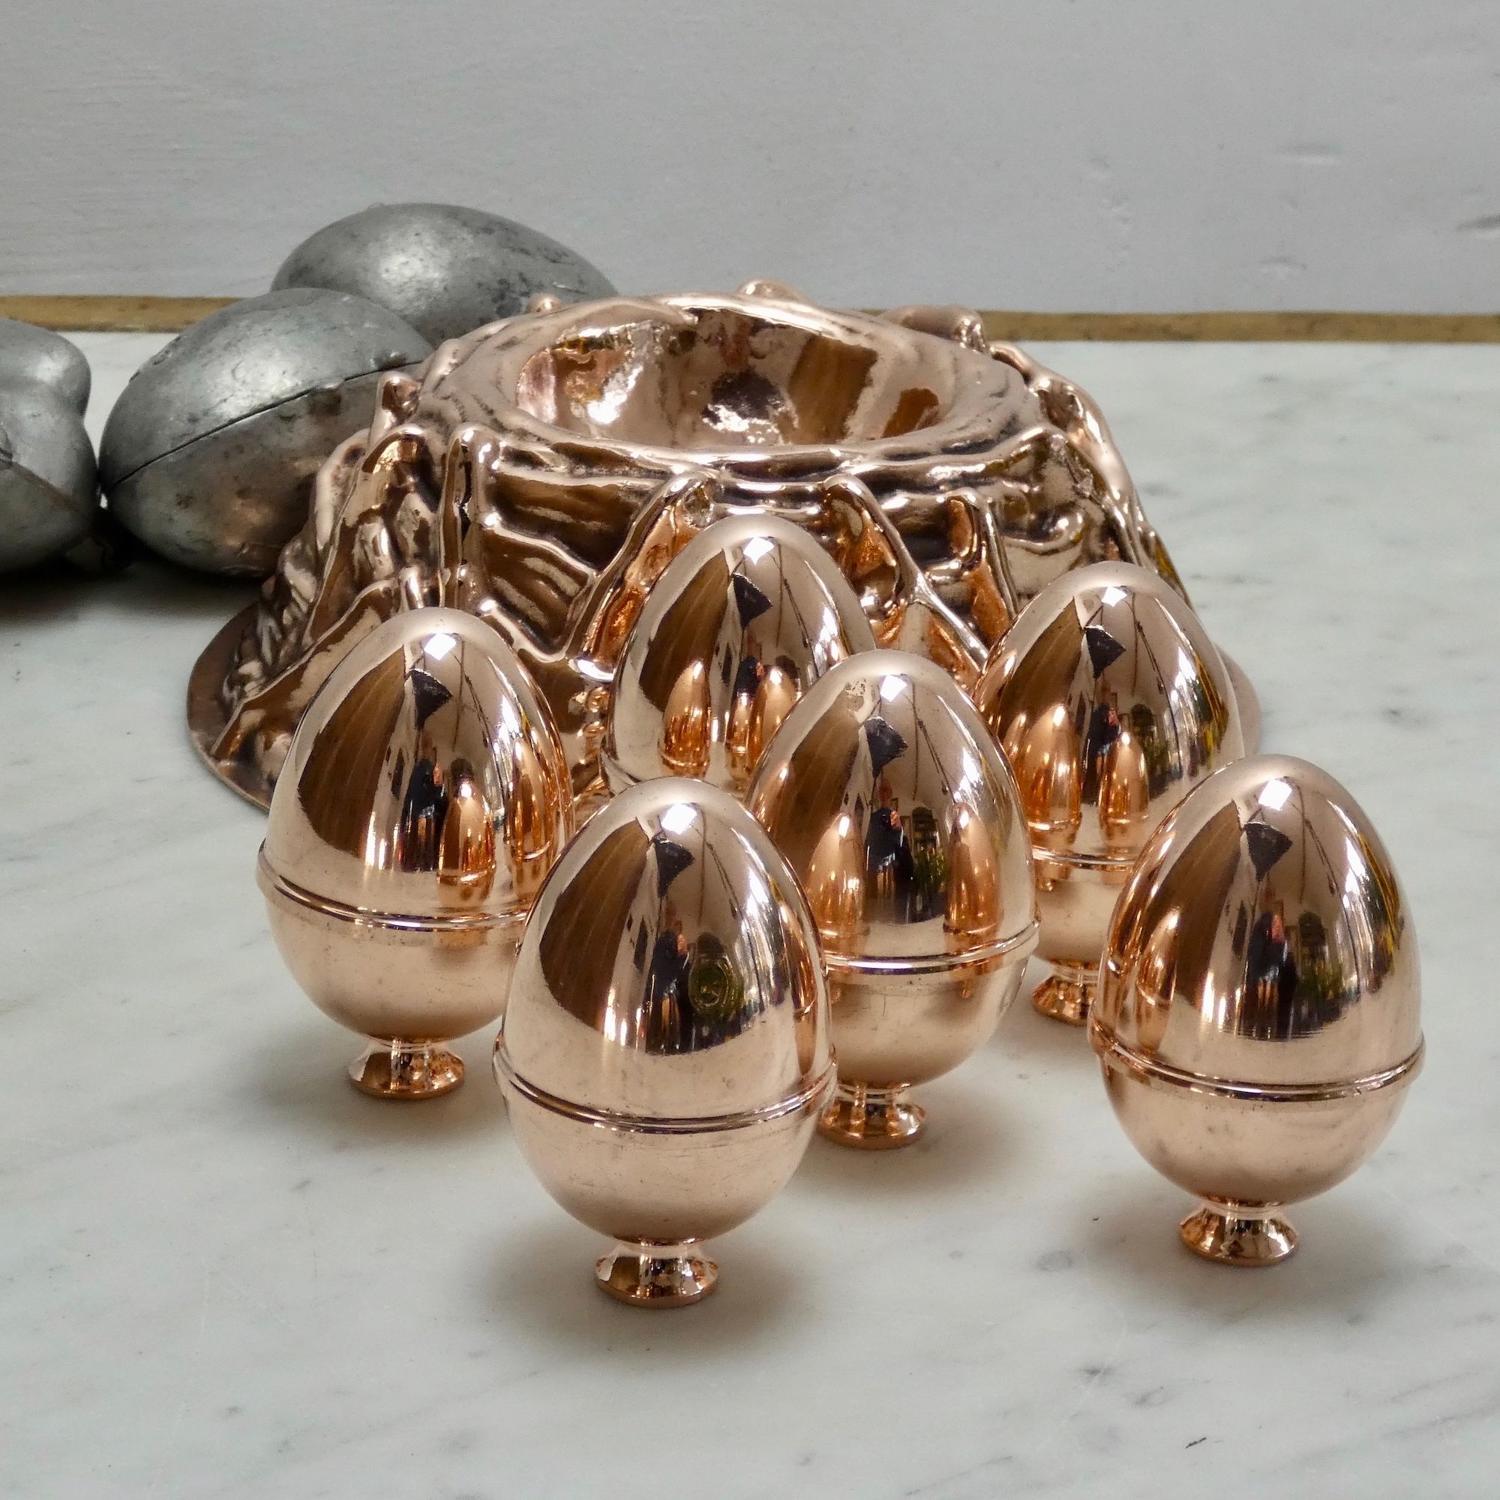 Miniature copper eggs